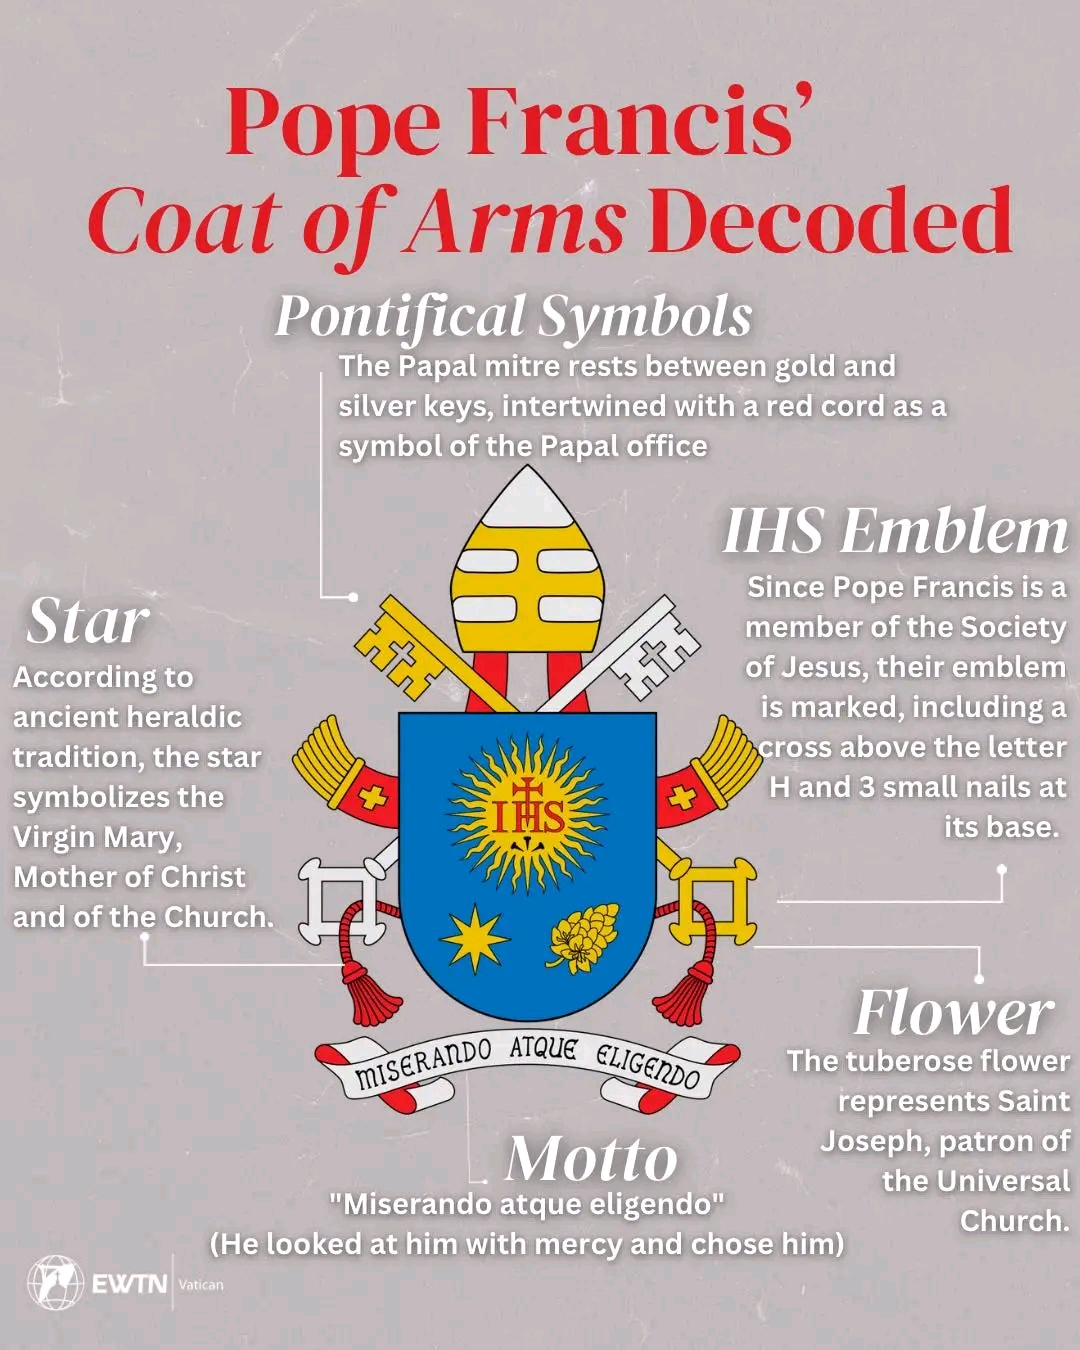 popefrancis #anniversary #history #coatofarms #symbolism #IHS #Jesuit #papacy